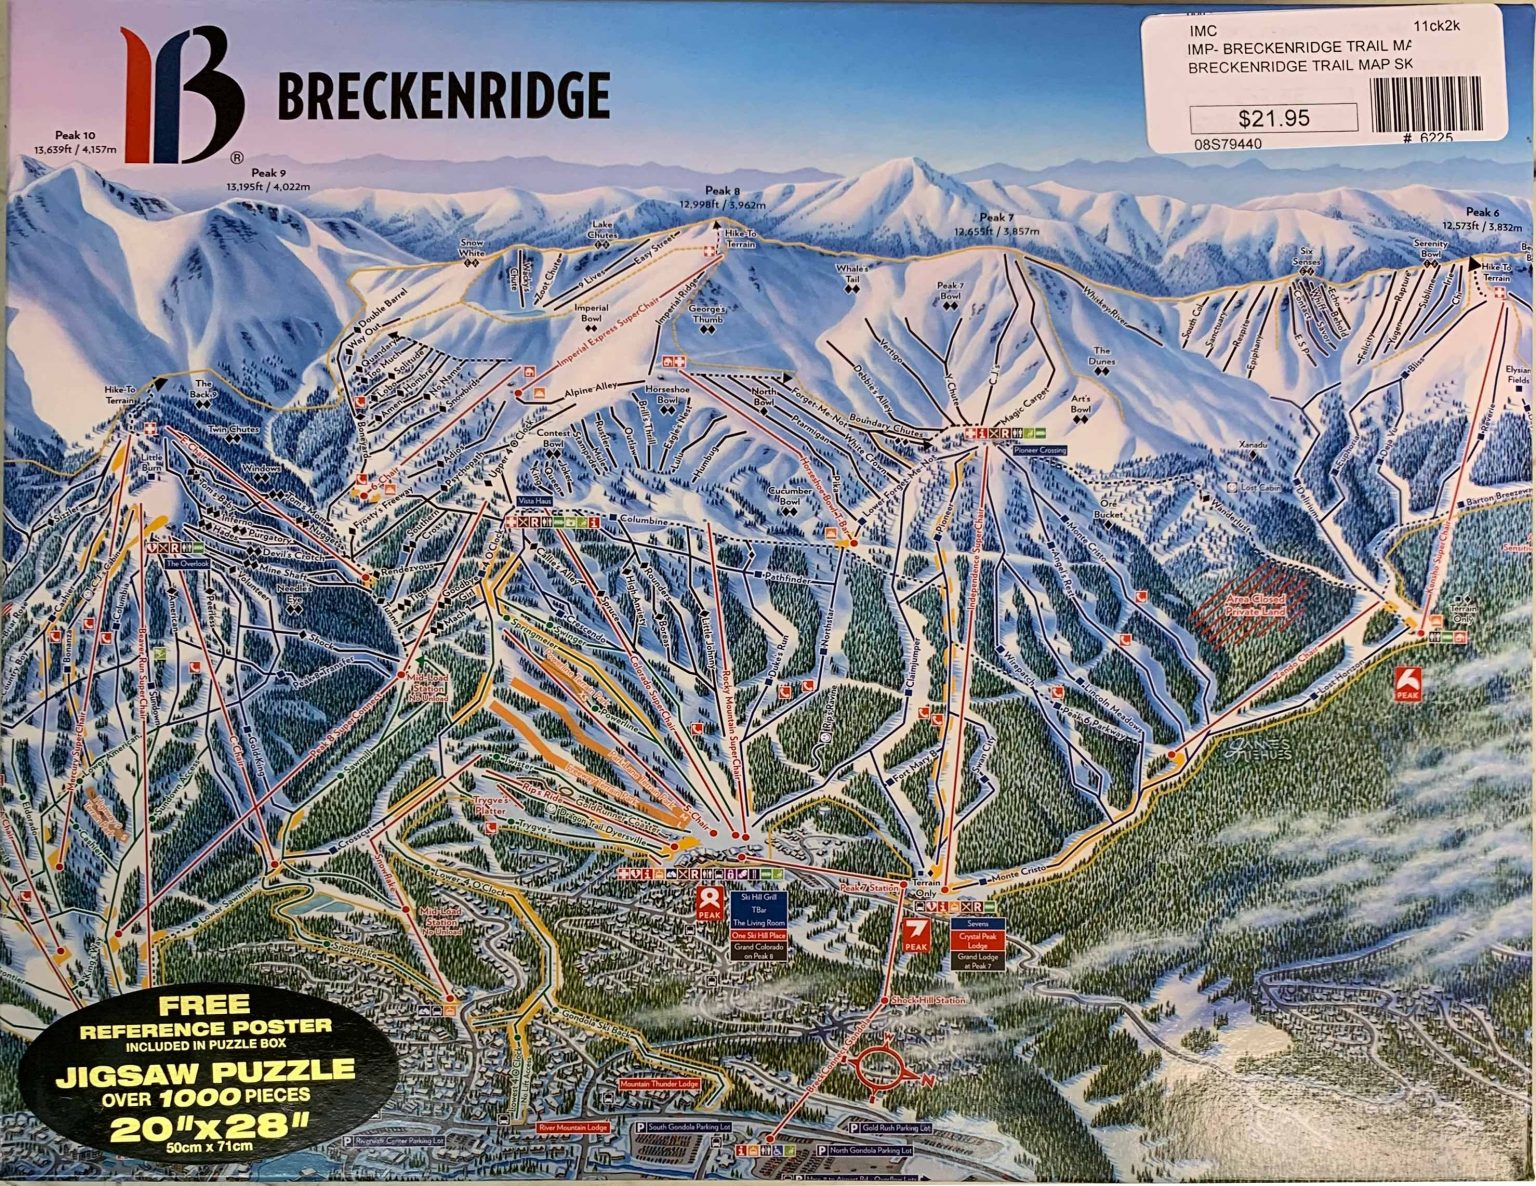 Breckenridge, Colorado Ski Resort Trail Map, 1000 pieces Art Source